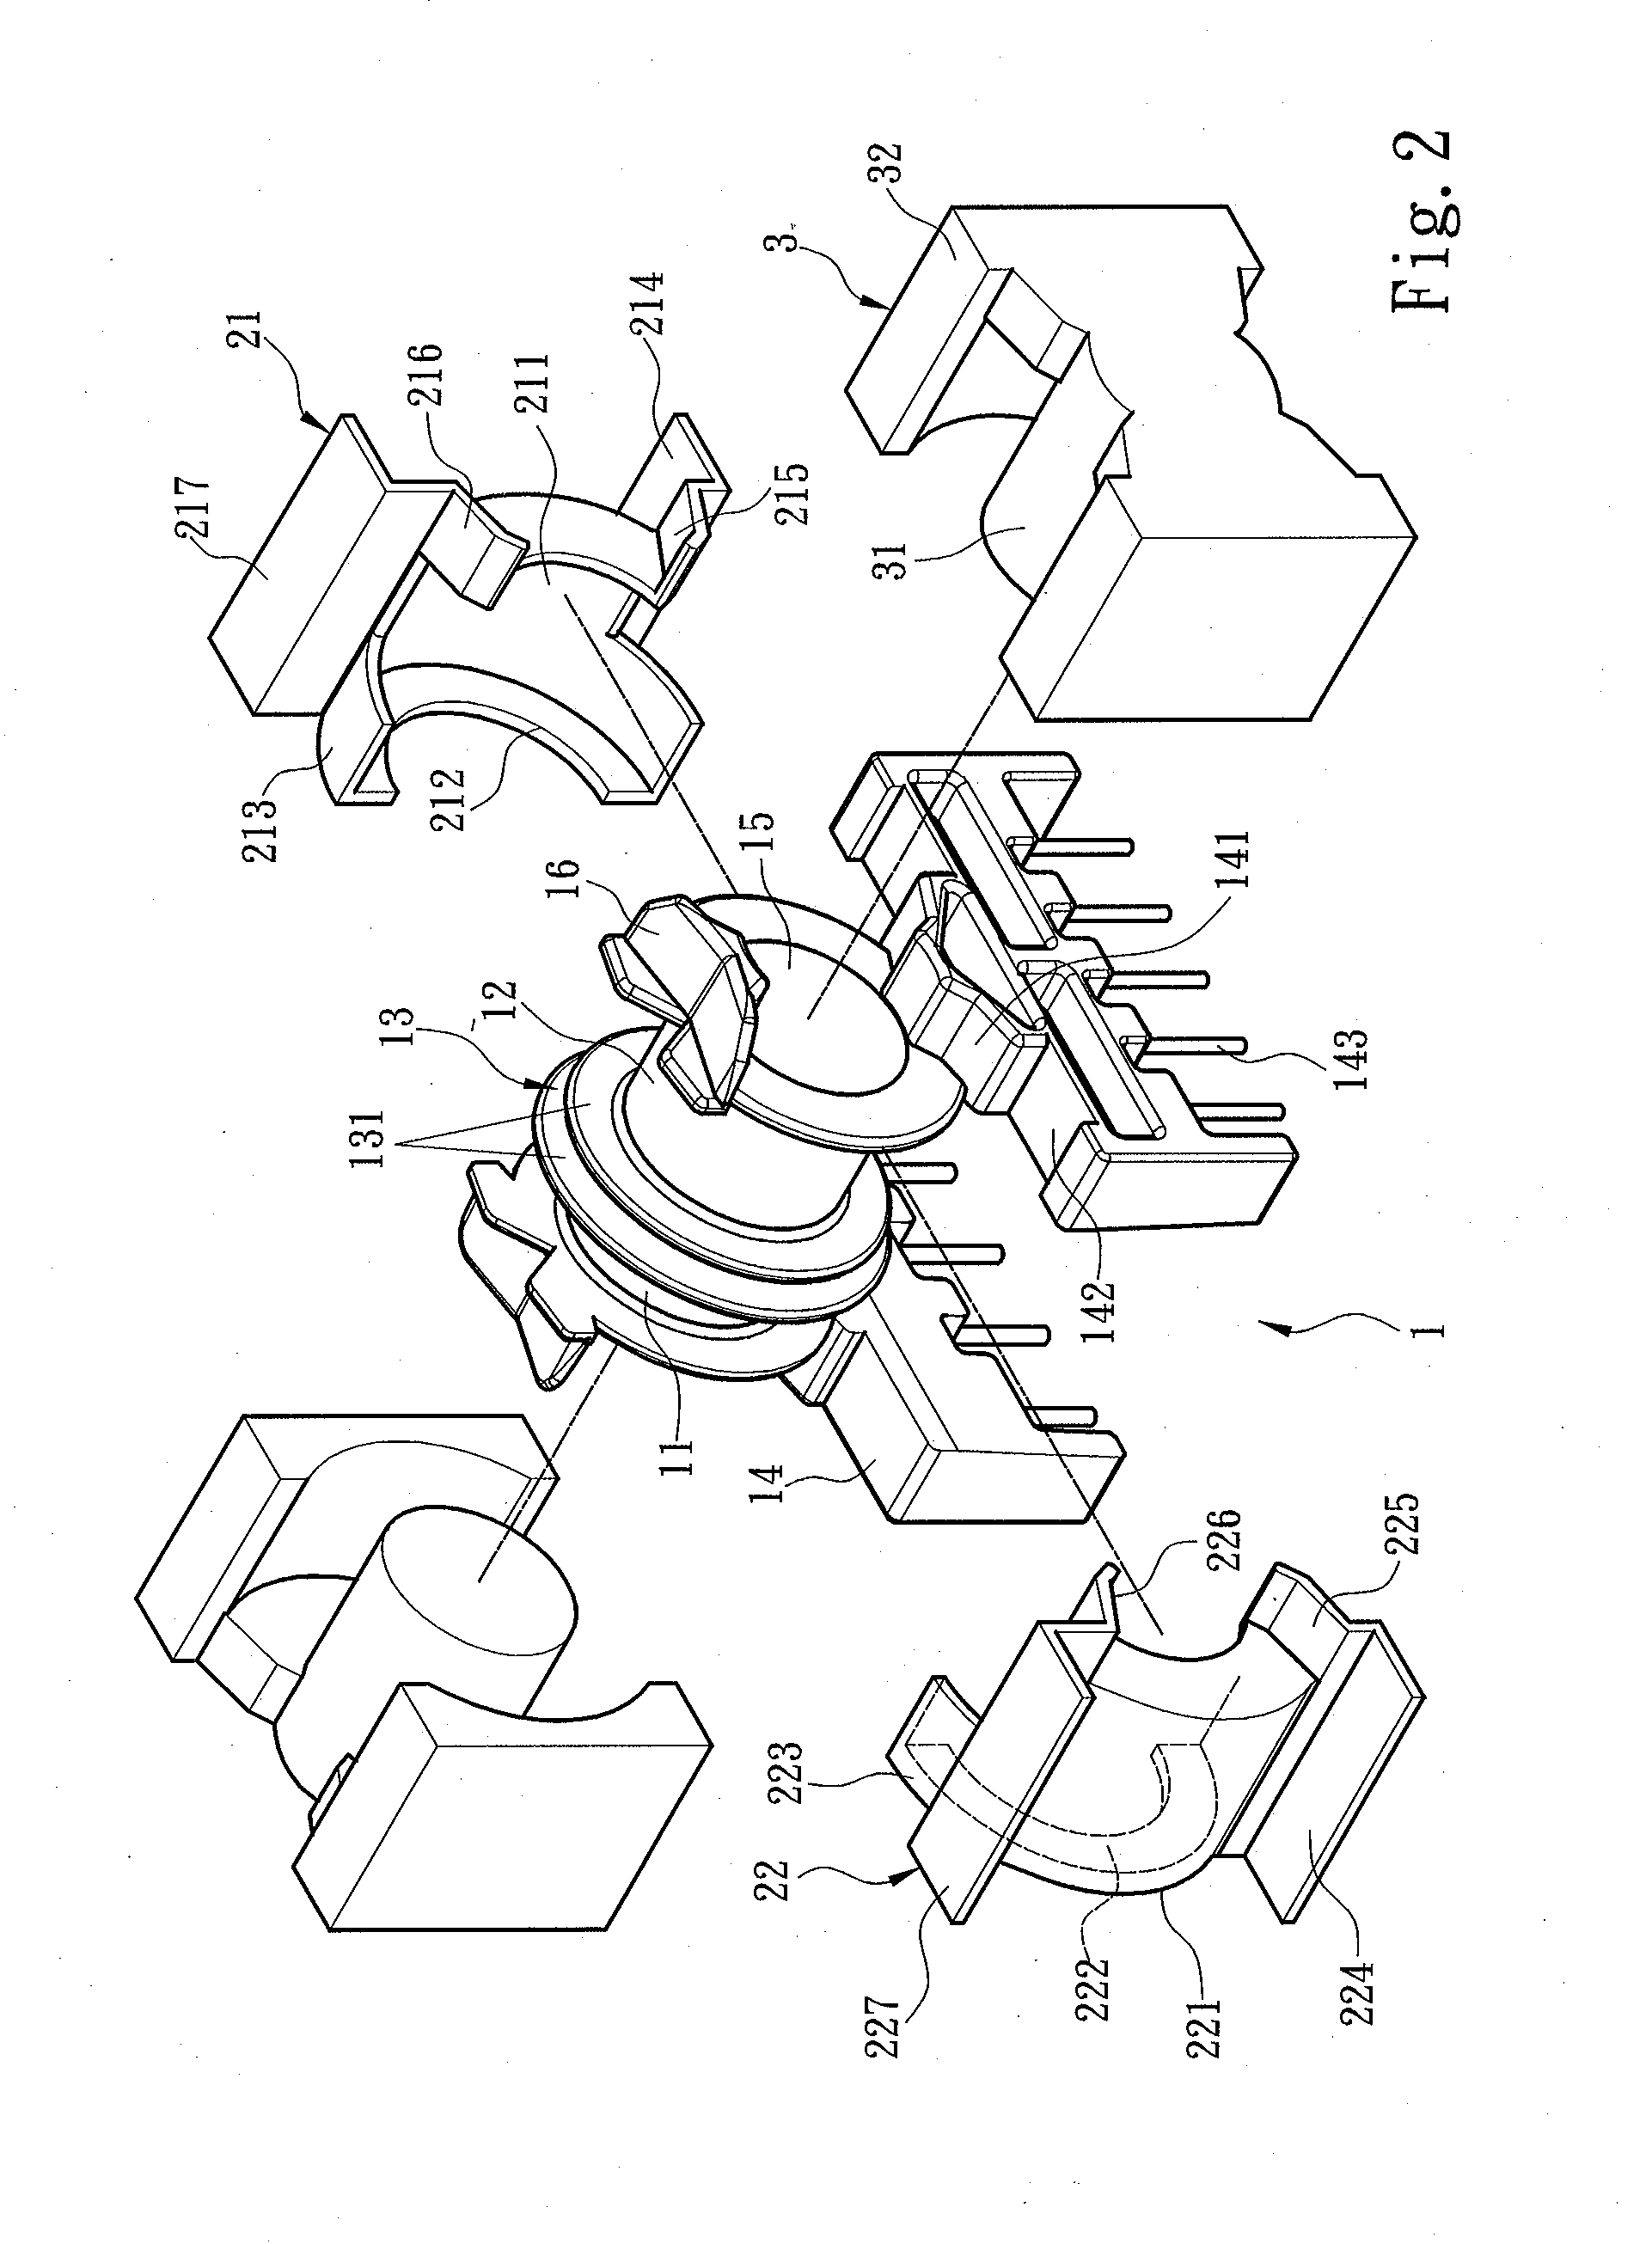 Composite isolating transformer